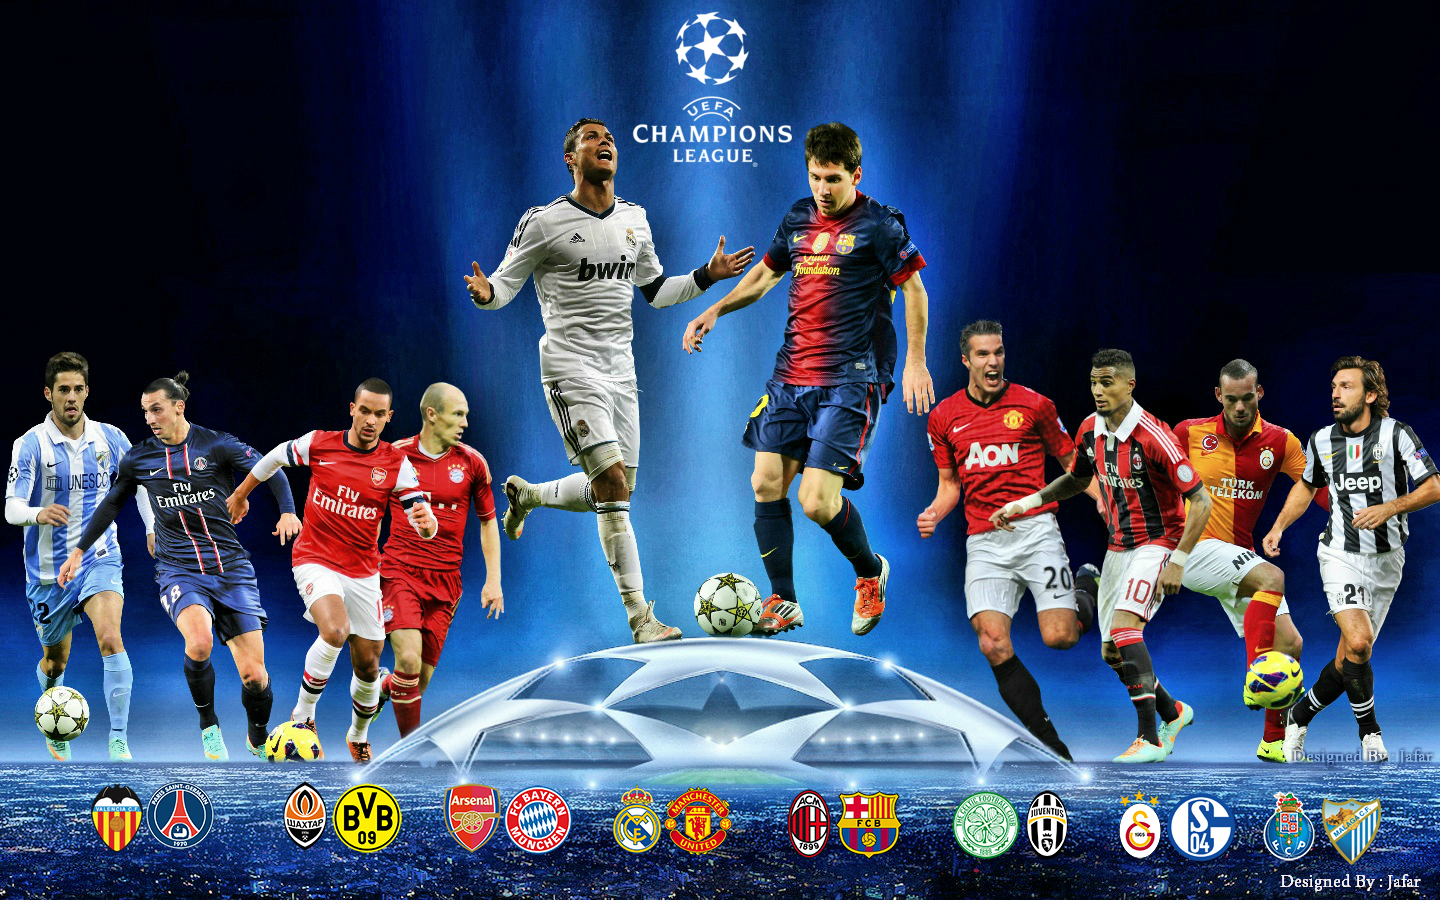 uefa champions league wallpapers 2013 wallpaper   ForWallpapercom